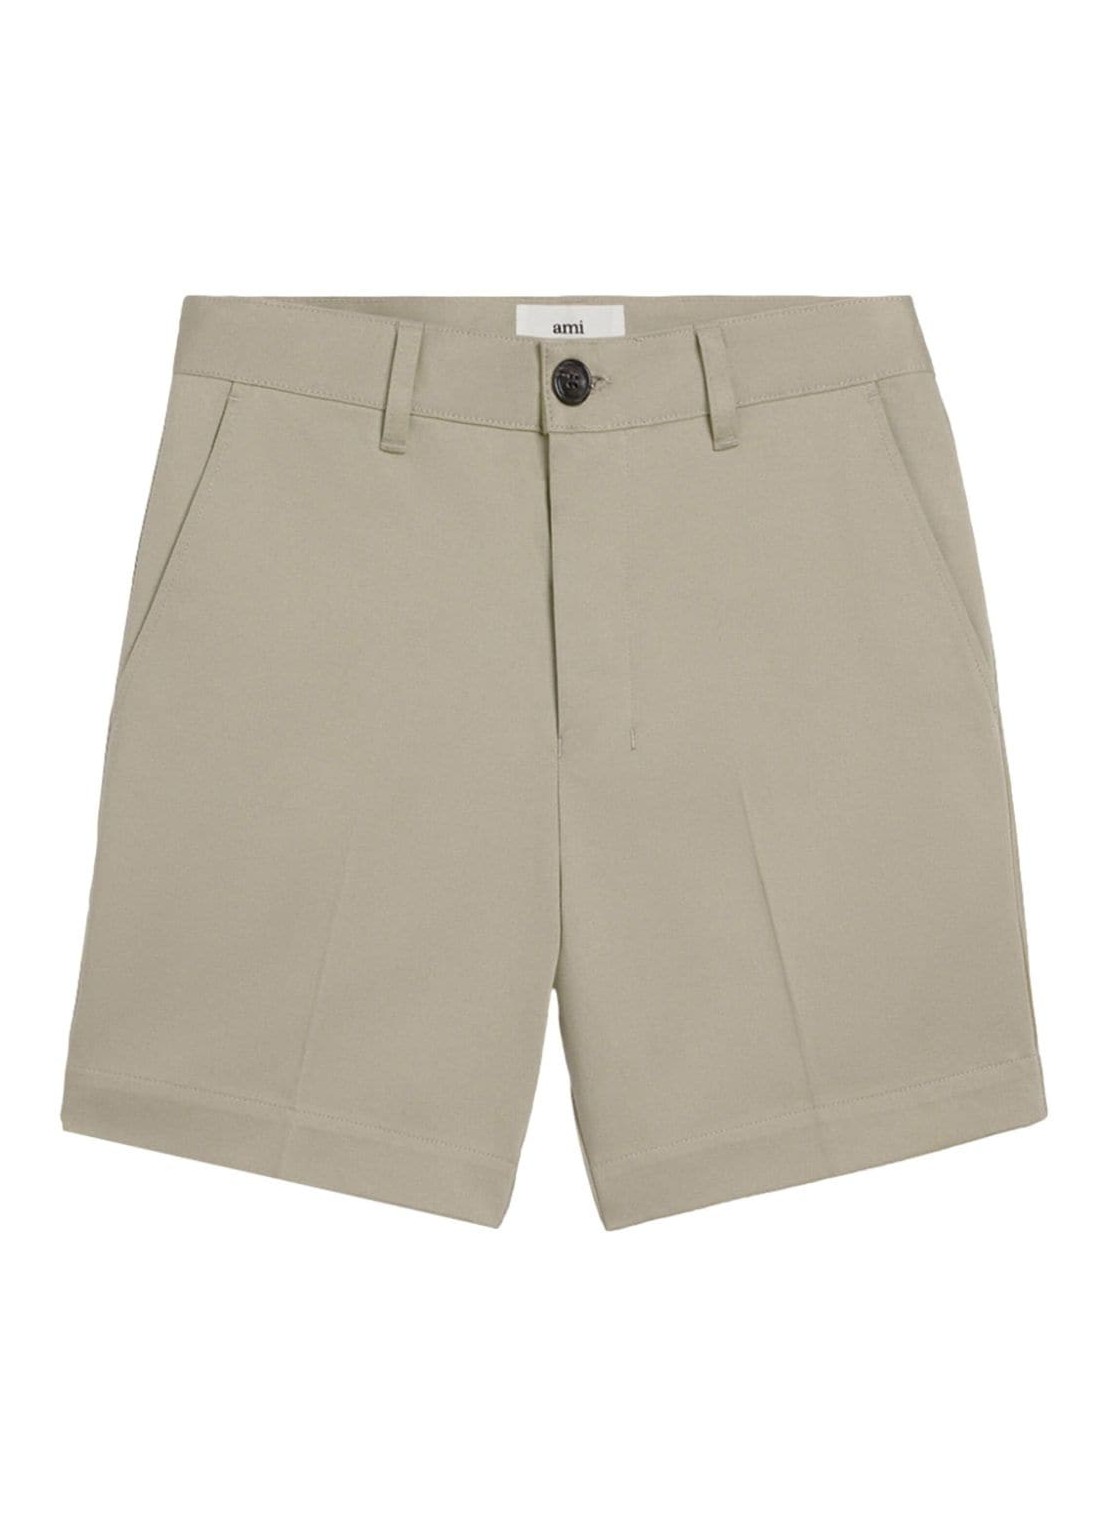 Pantalon corto ami short pant manchino shorts - hso004co0009 317 talla verde
 